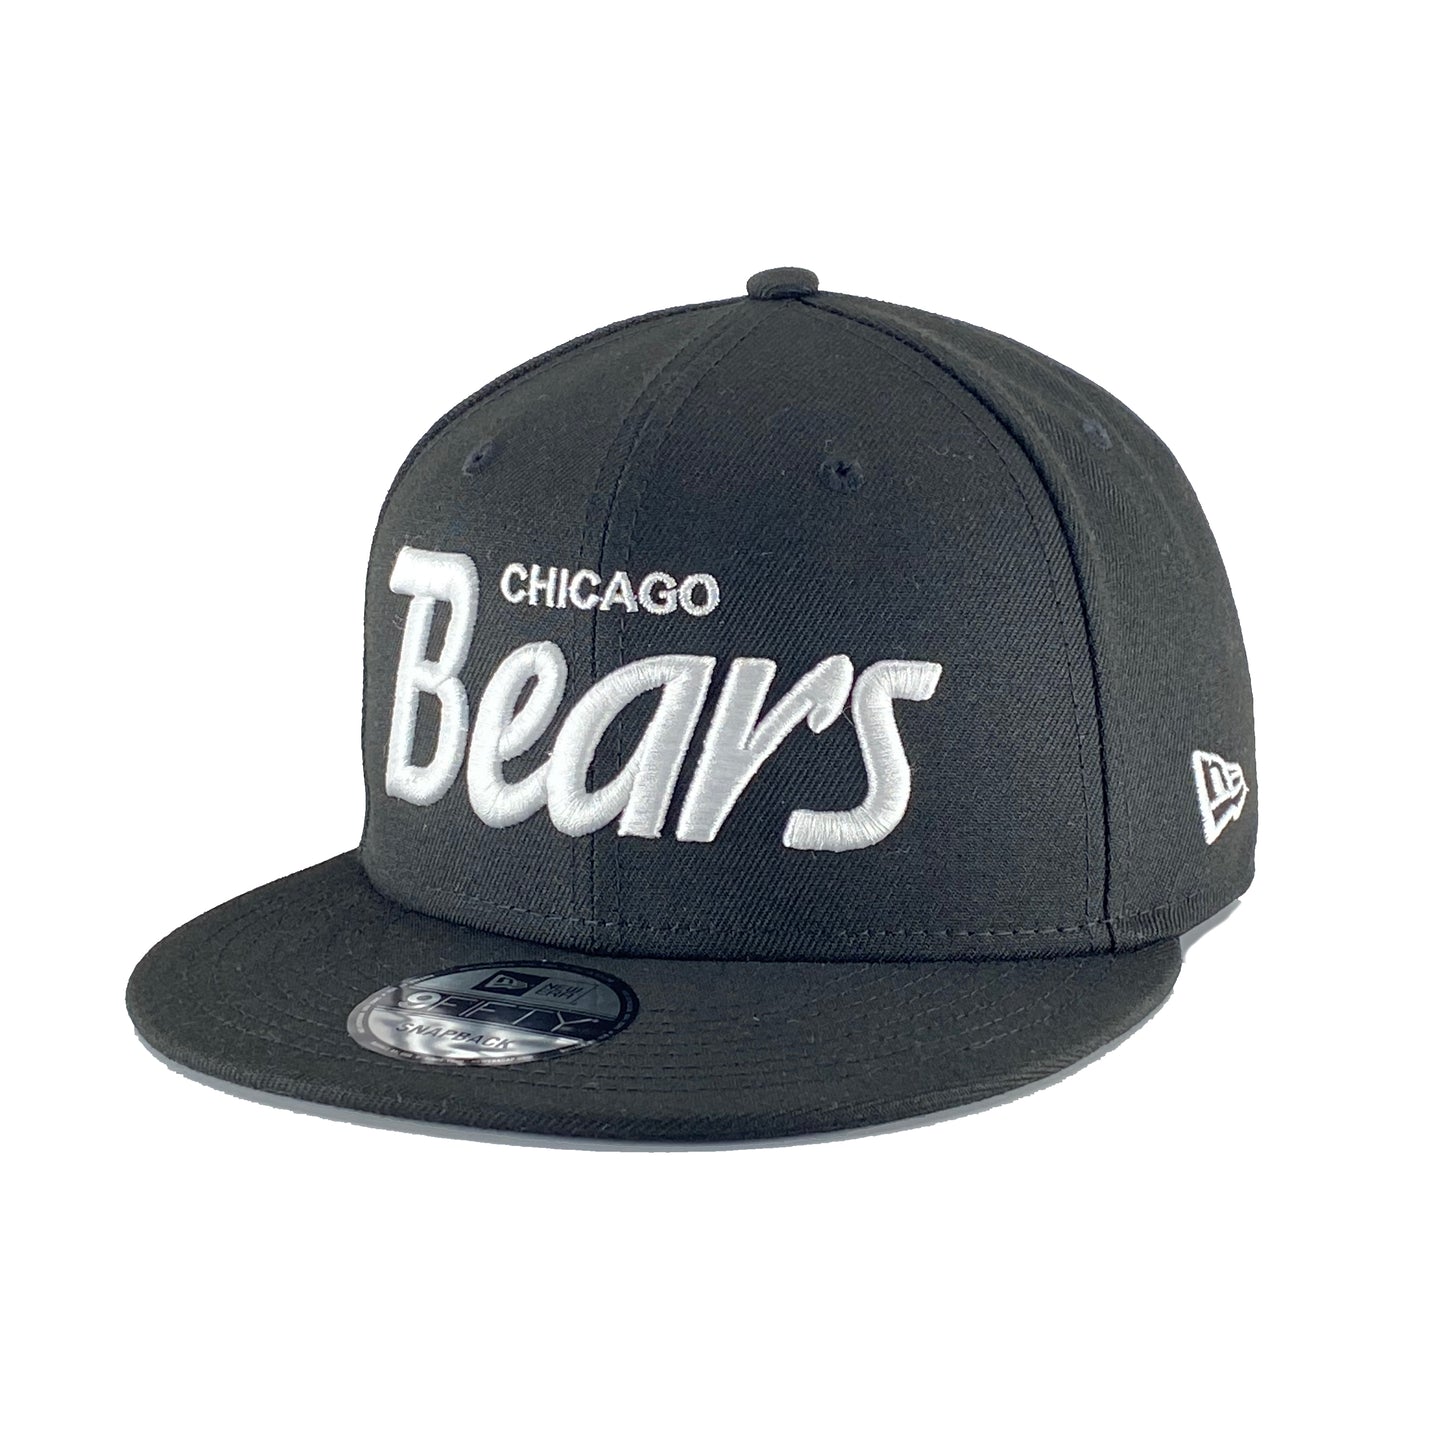 Chicago Bears Chase Script Black New Era 9FIFTY Snapback Hat